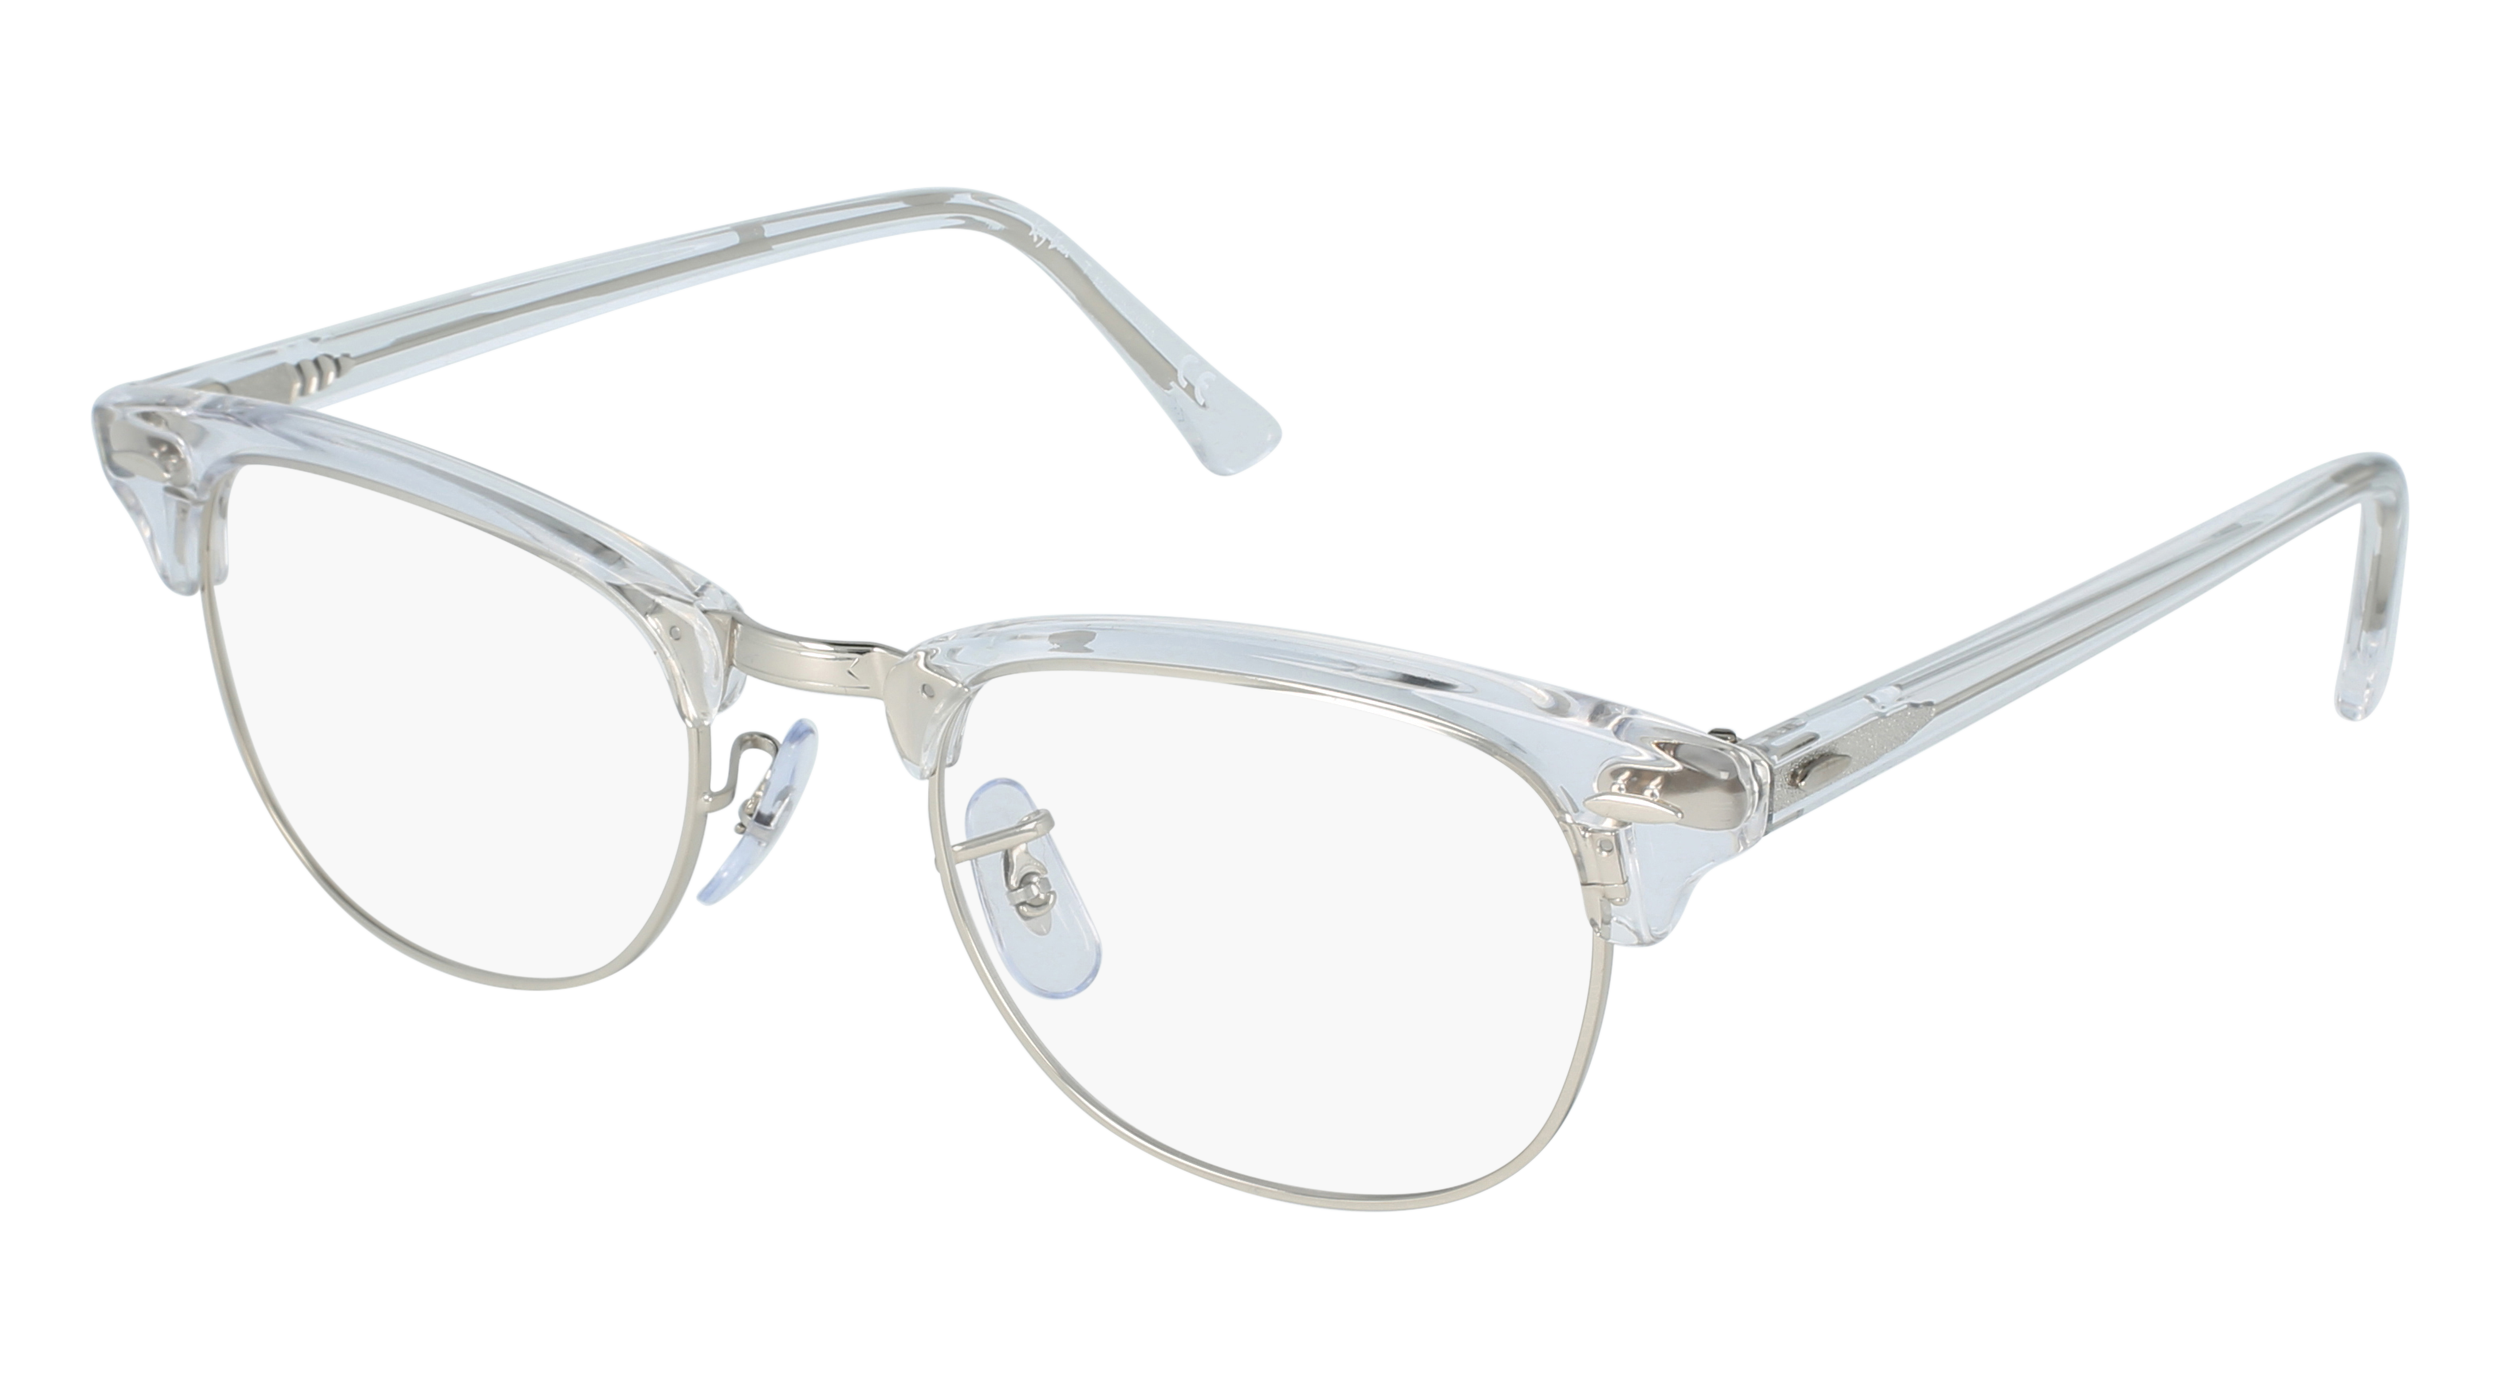 Rayban Rb 5154 White Transparent Unisex S Eyeglasses Jcpenney Optical